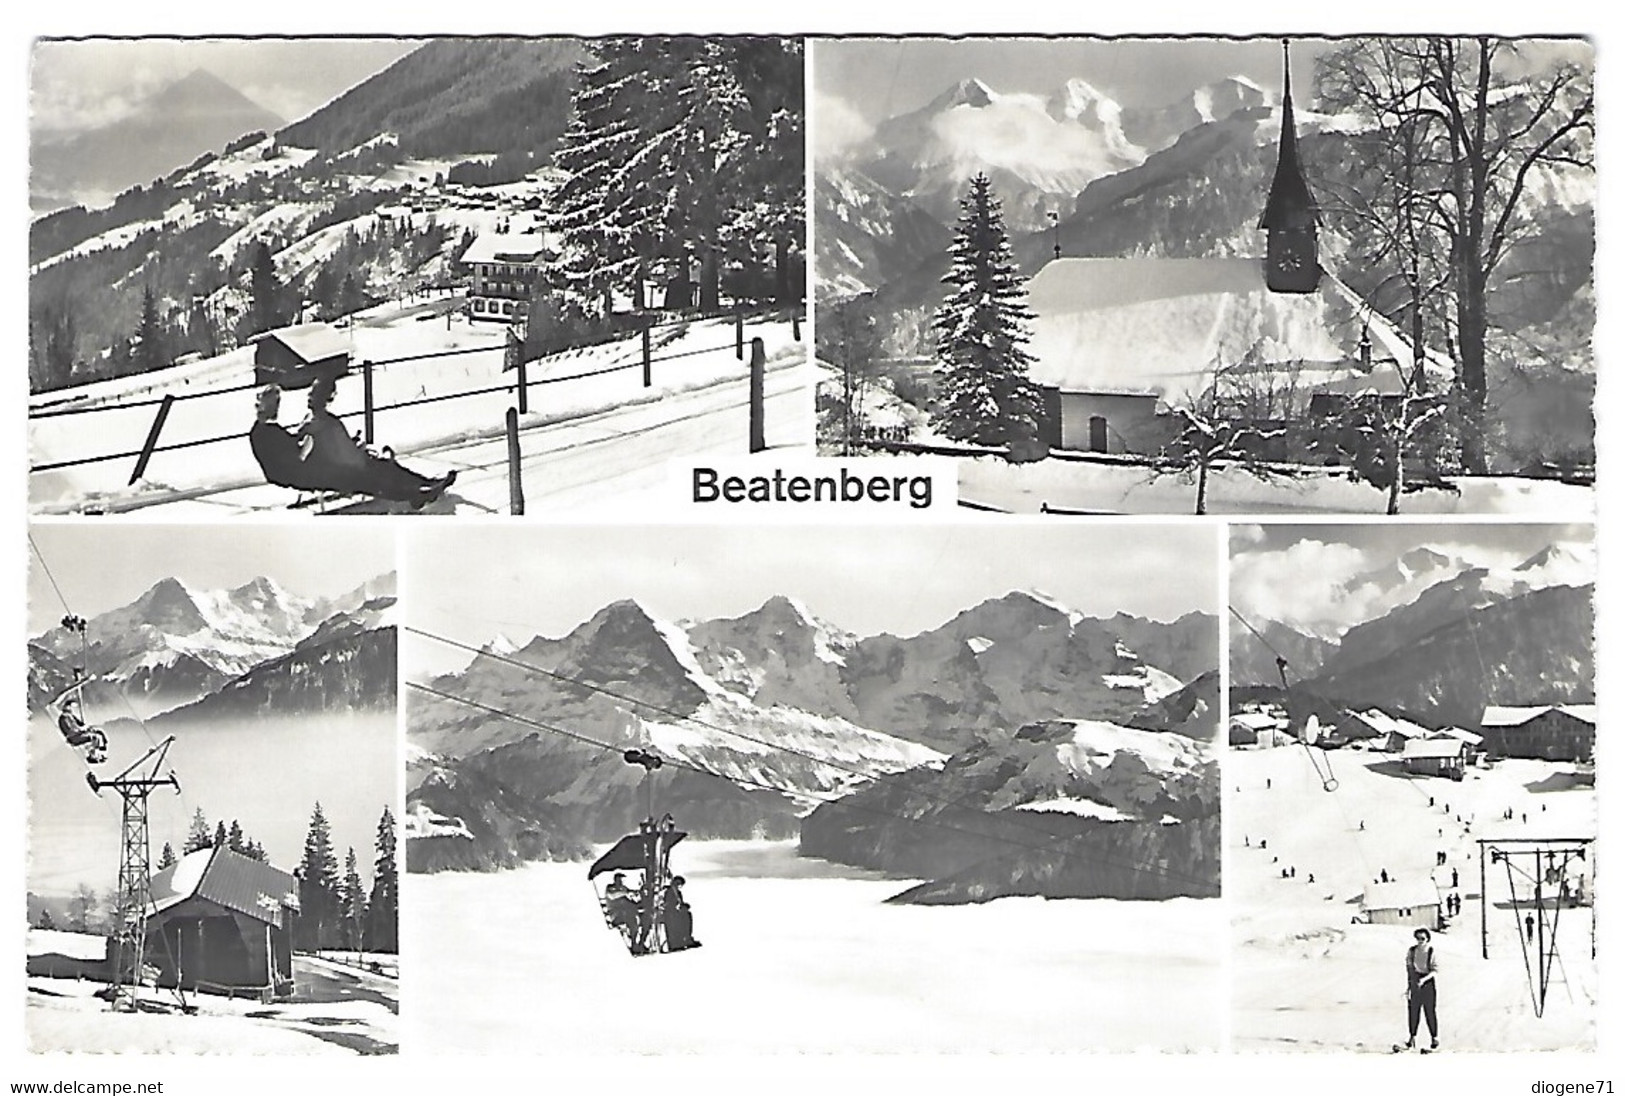 Beatenberg Skilift - Beatenberg